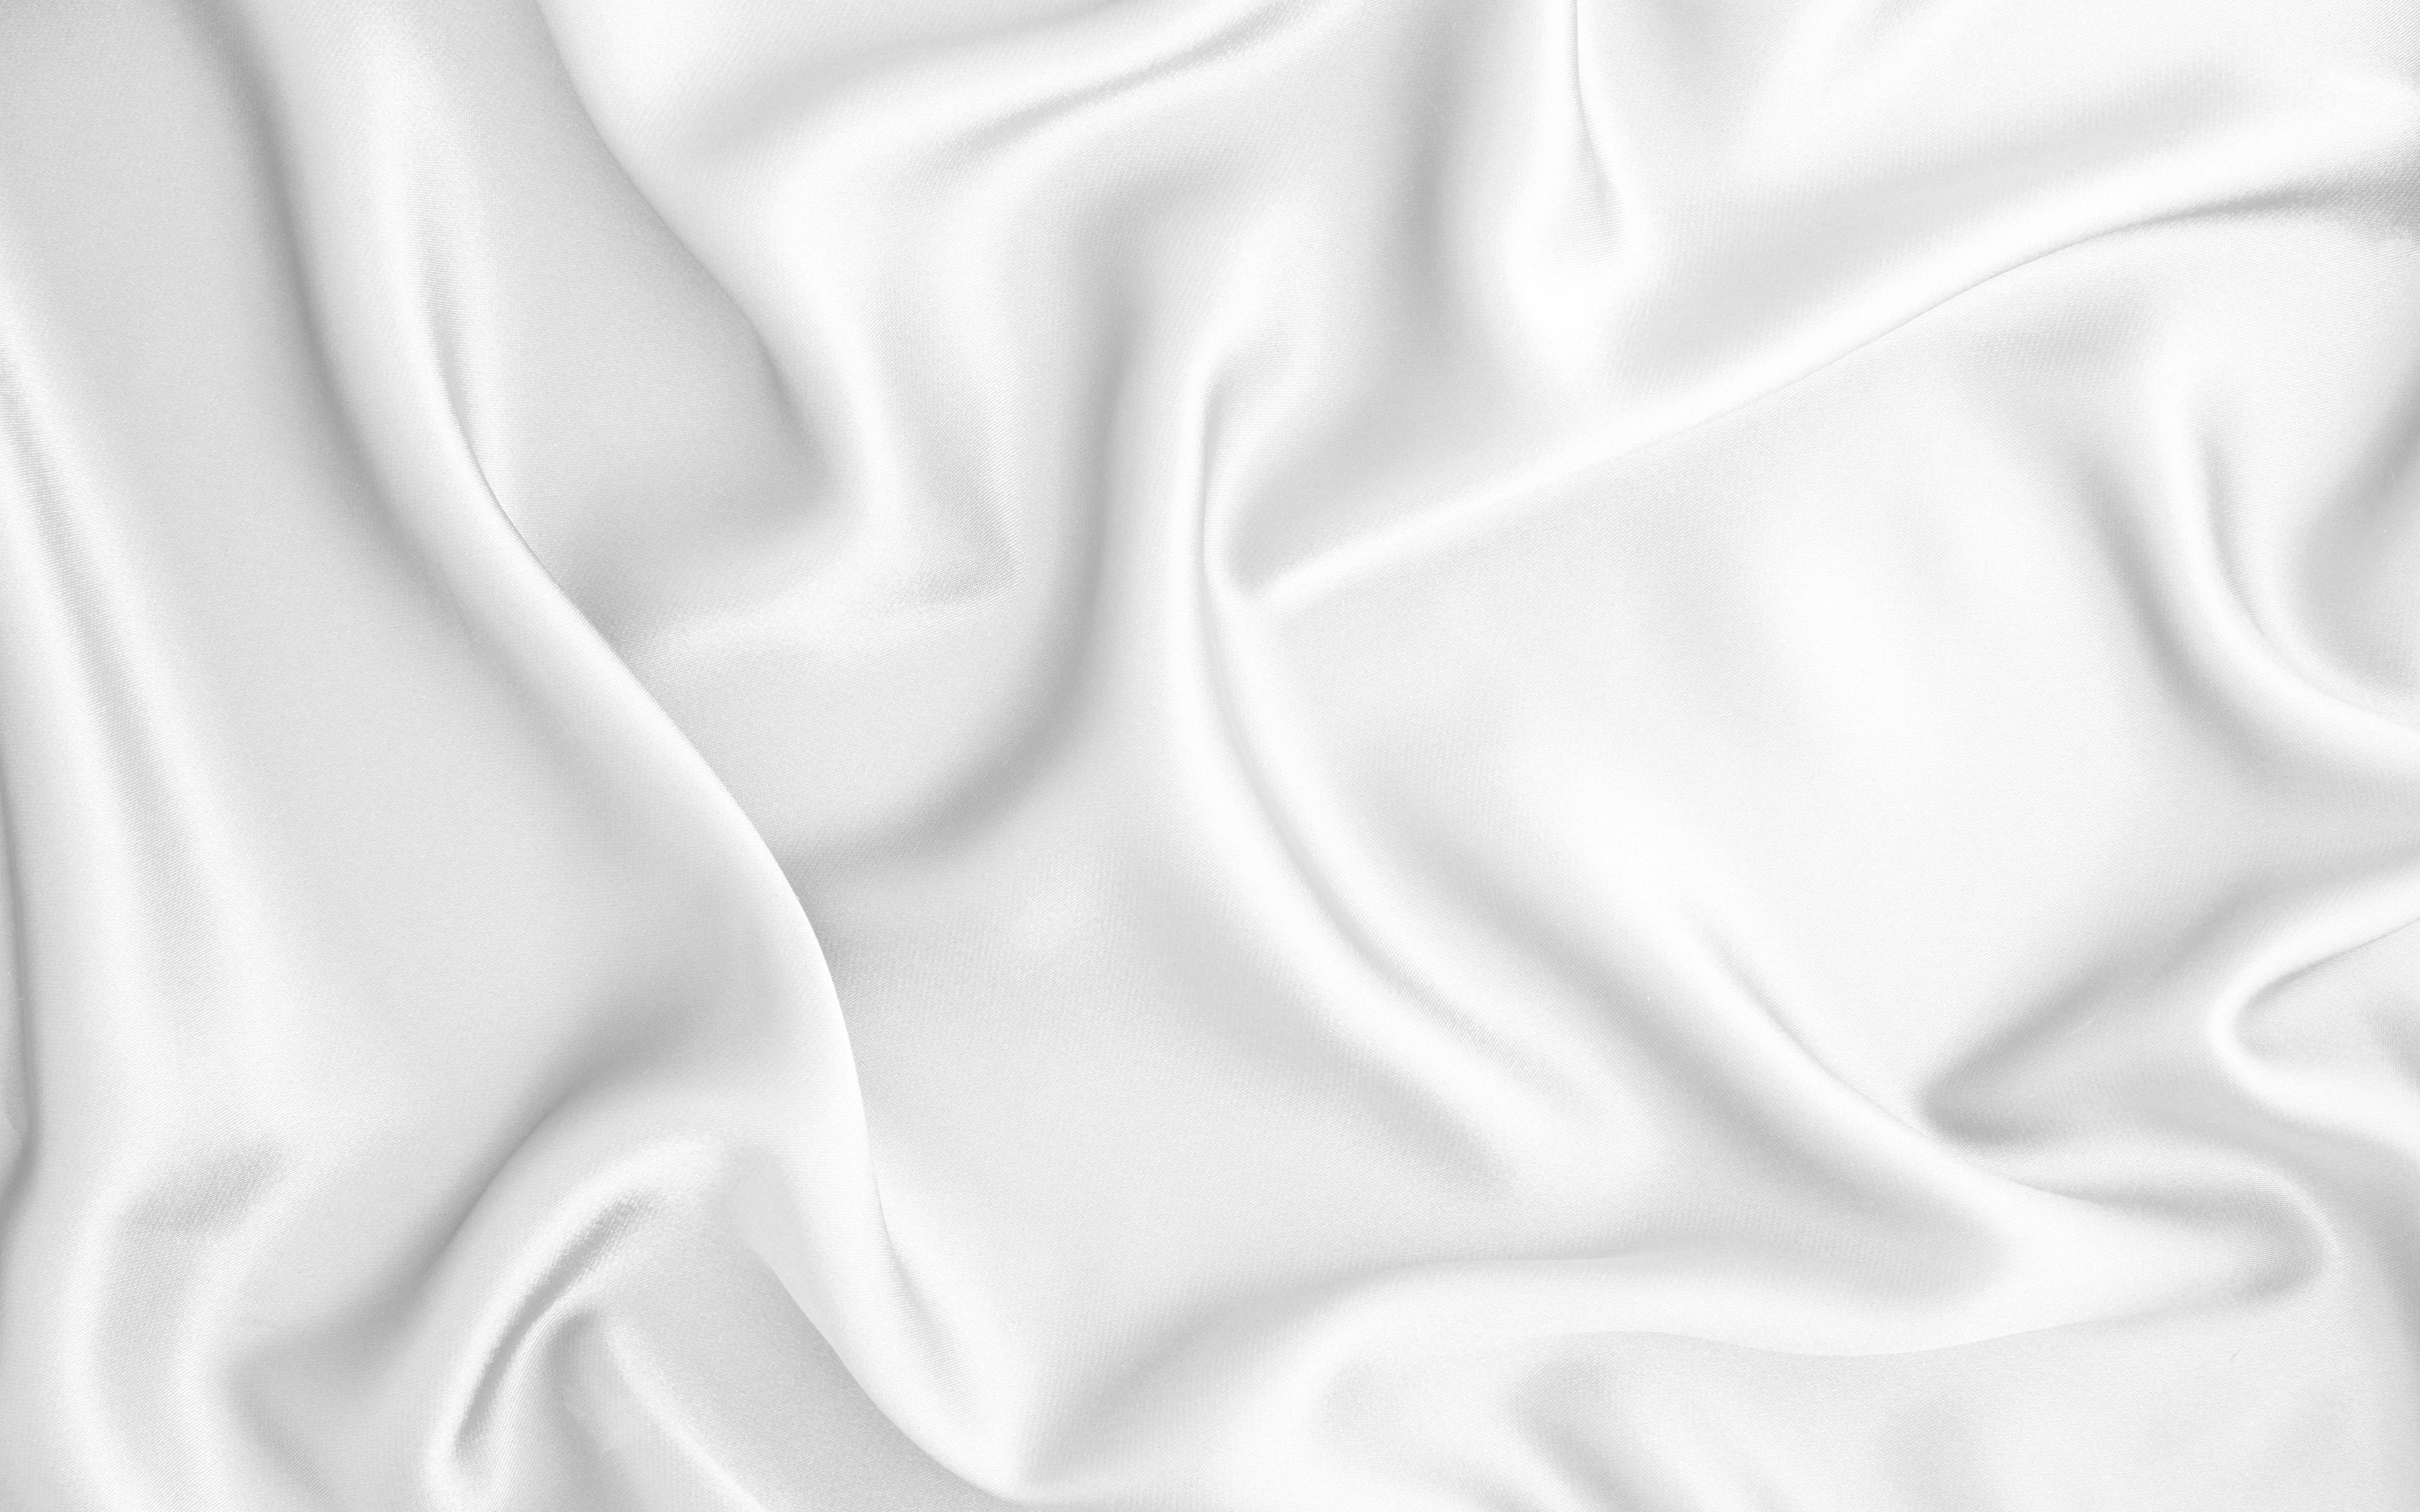 Download wallpaper white silk texture, wavy fabric texture, silk, white fabric background, white satin, fabric textures, satin, silk textures, white fabric texture, white satin texture for desktop with resolution 3840x2400. High Quality